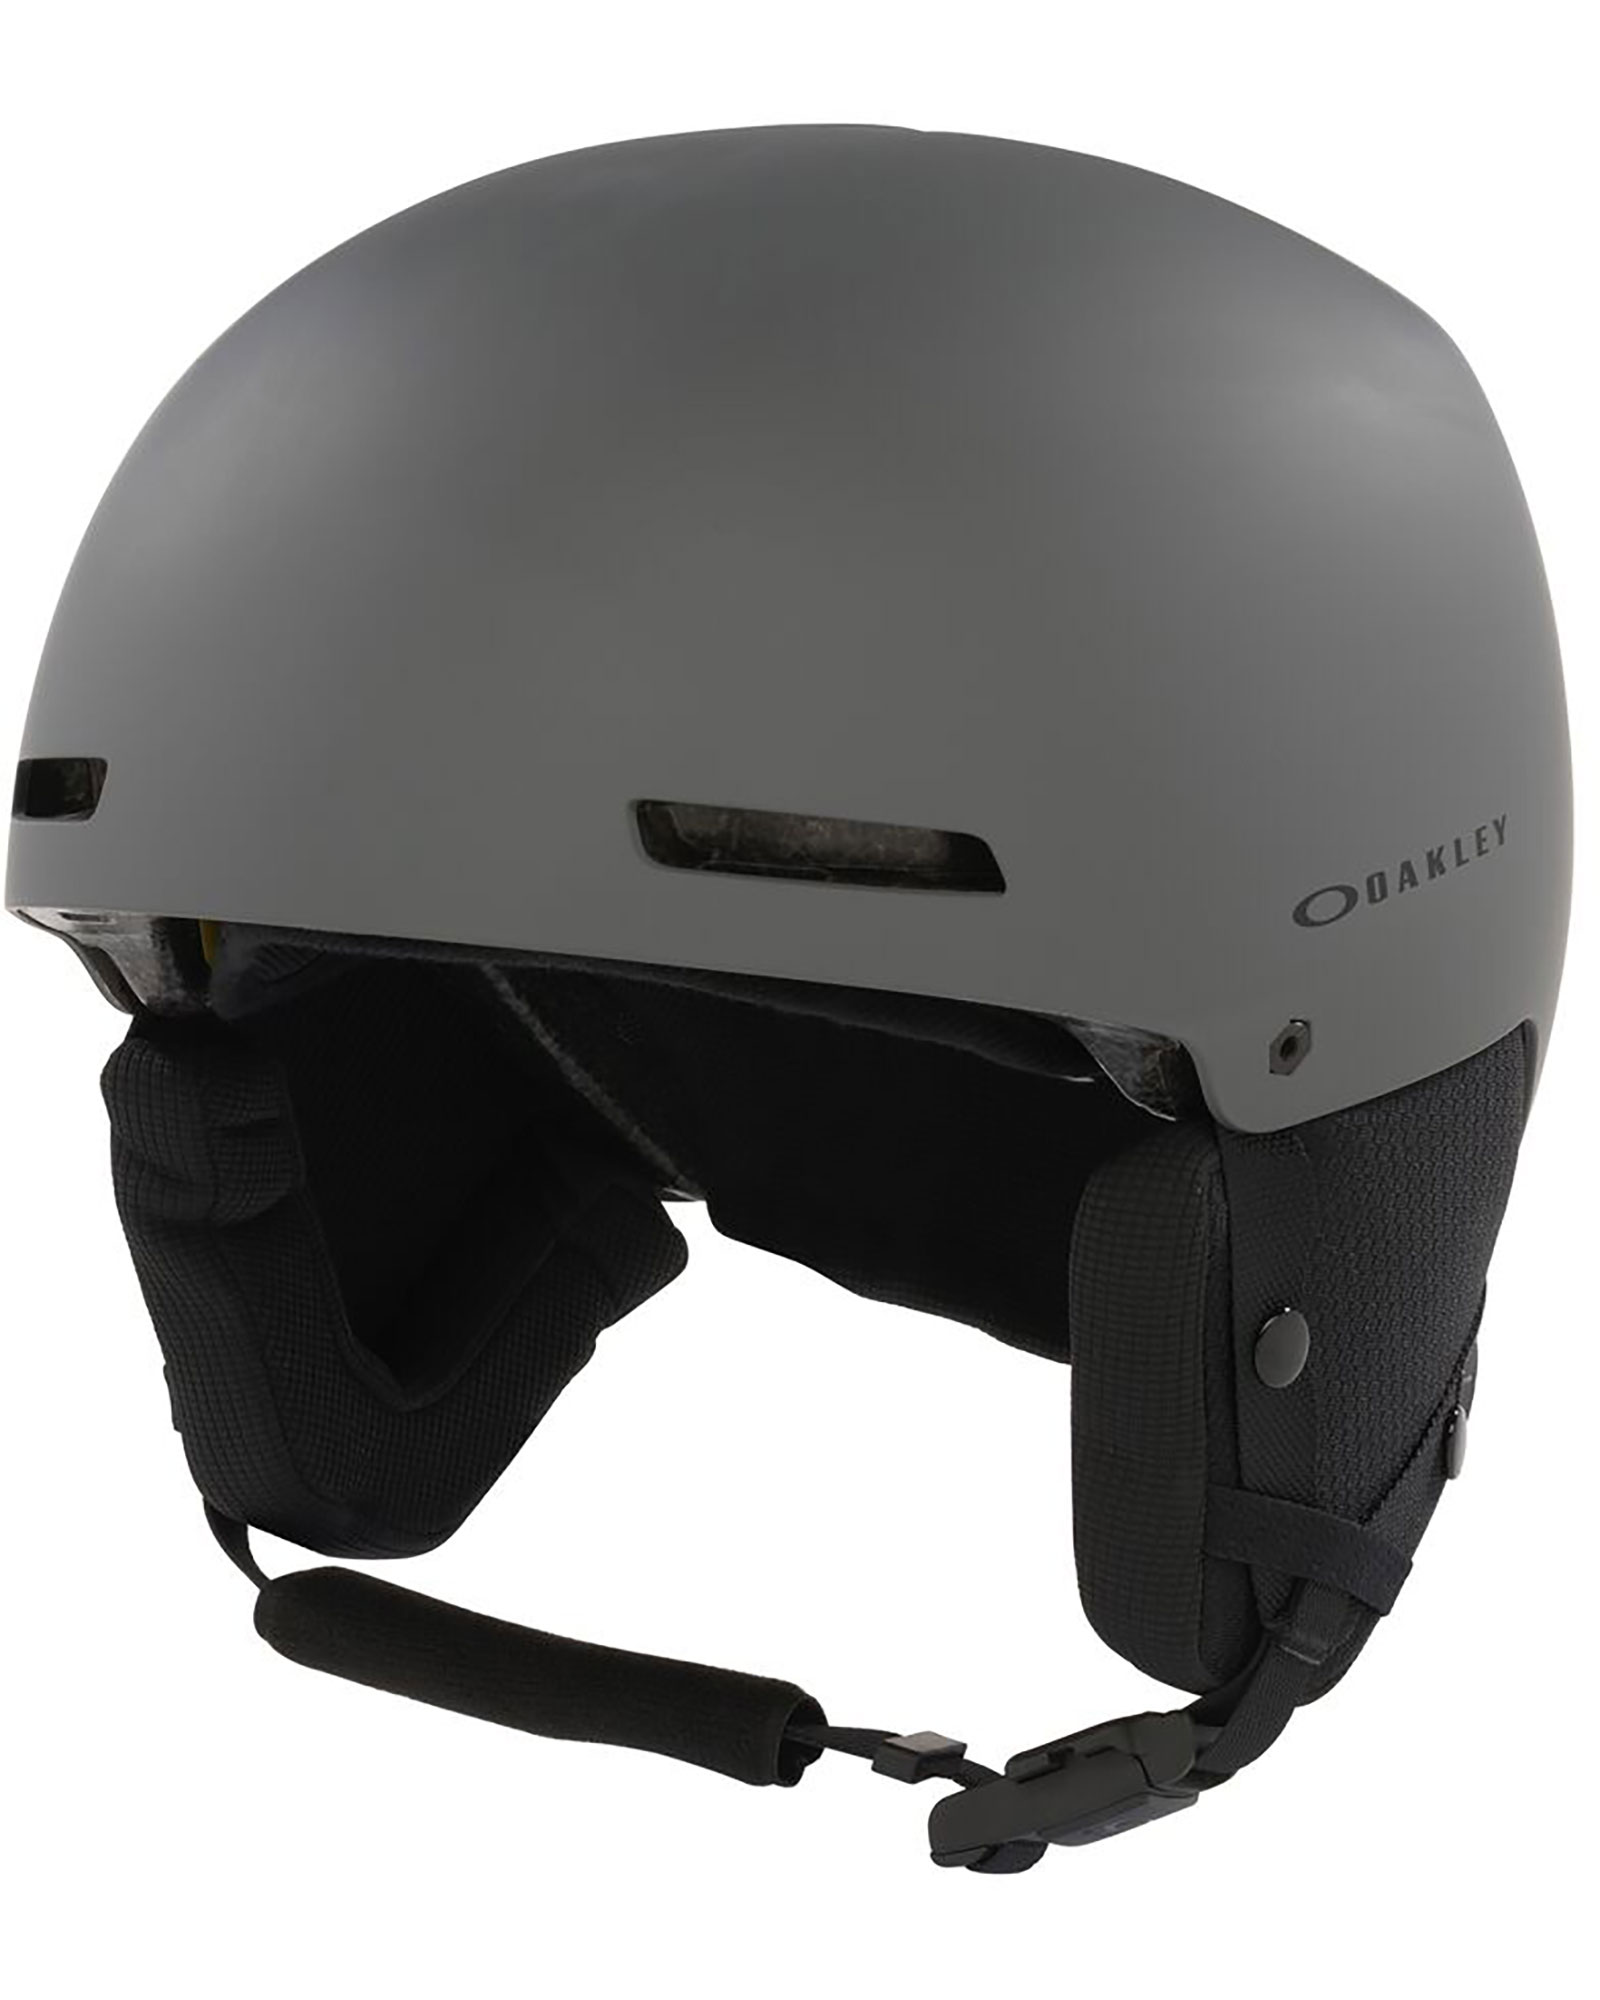 Oakley MOD1 Pro Helmet - Forged Iron L